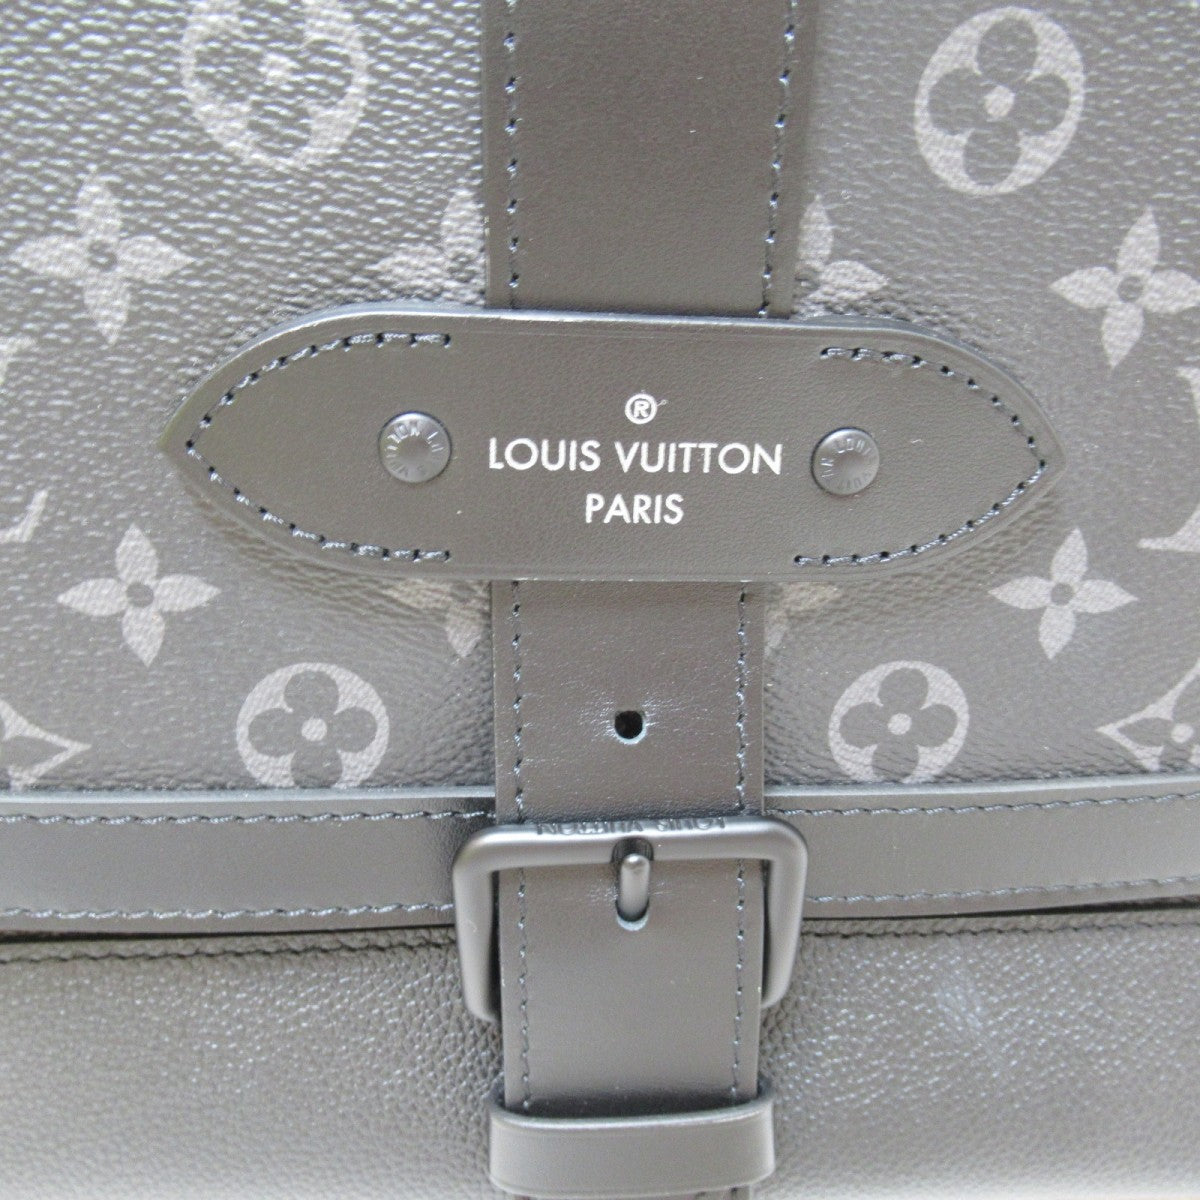 Louis Vuitton Saumur Messenger